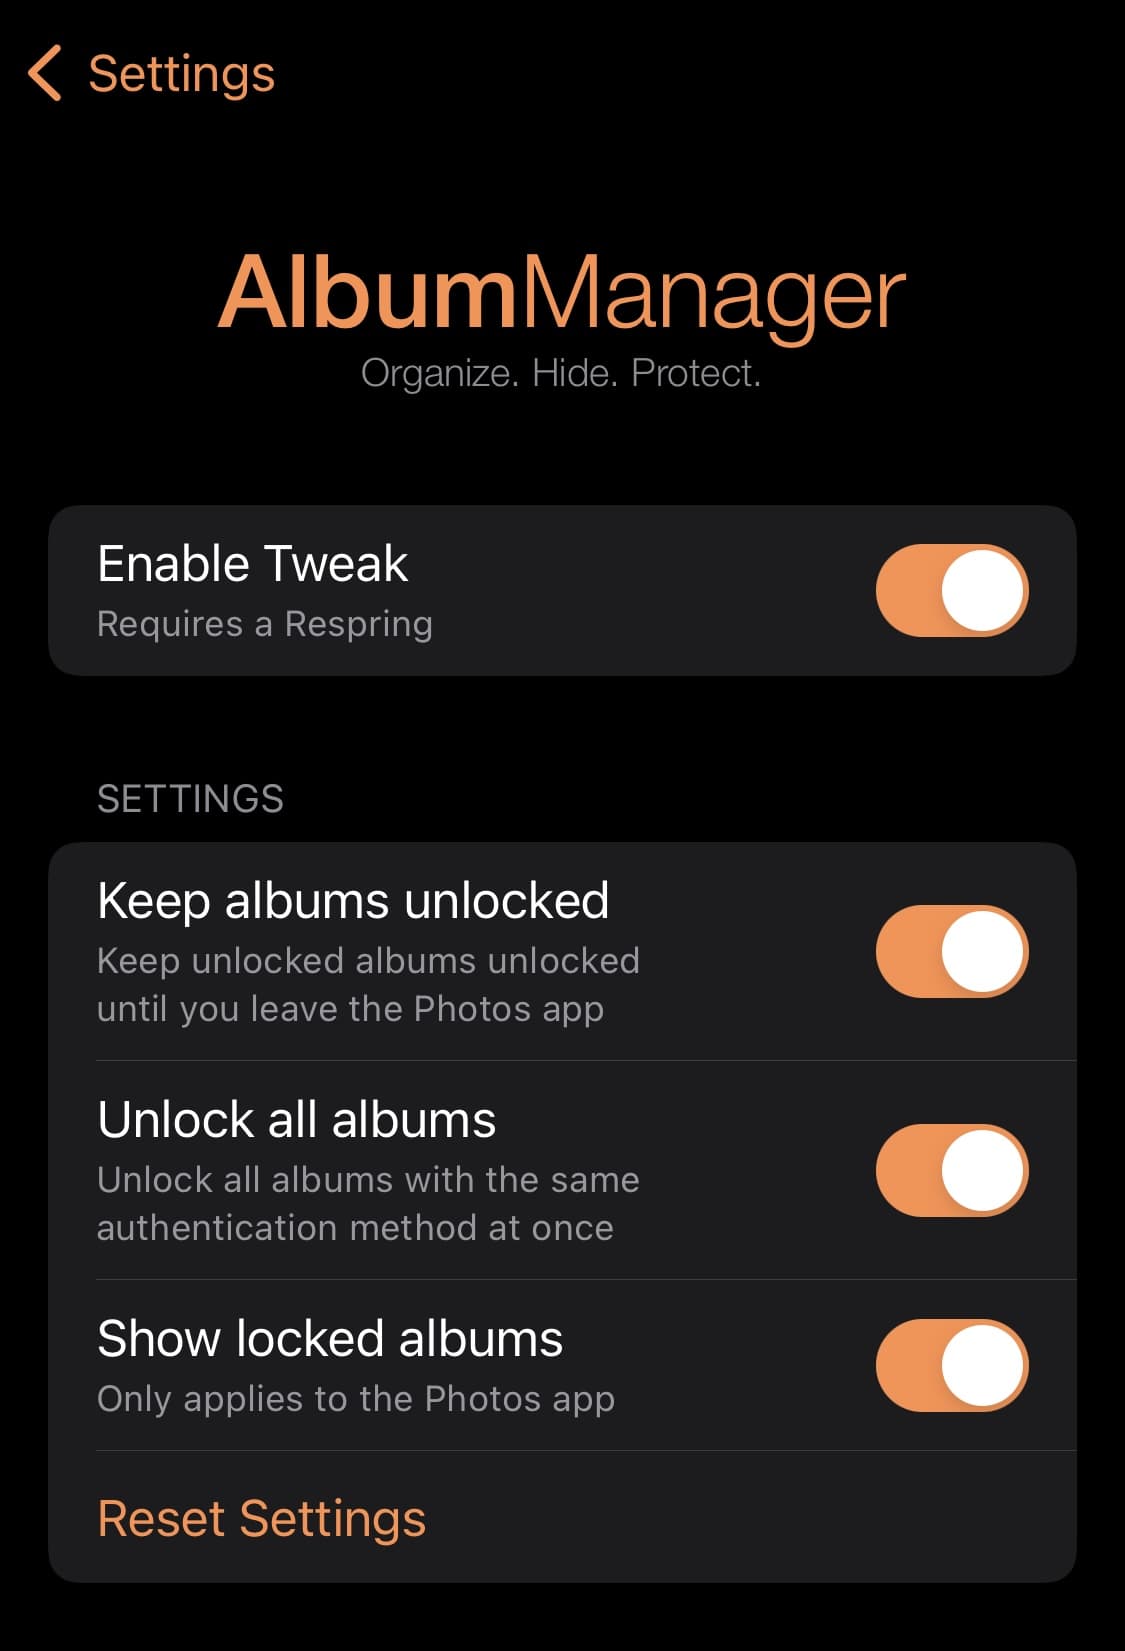 AlbumManager options to configure.